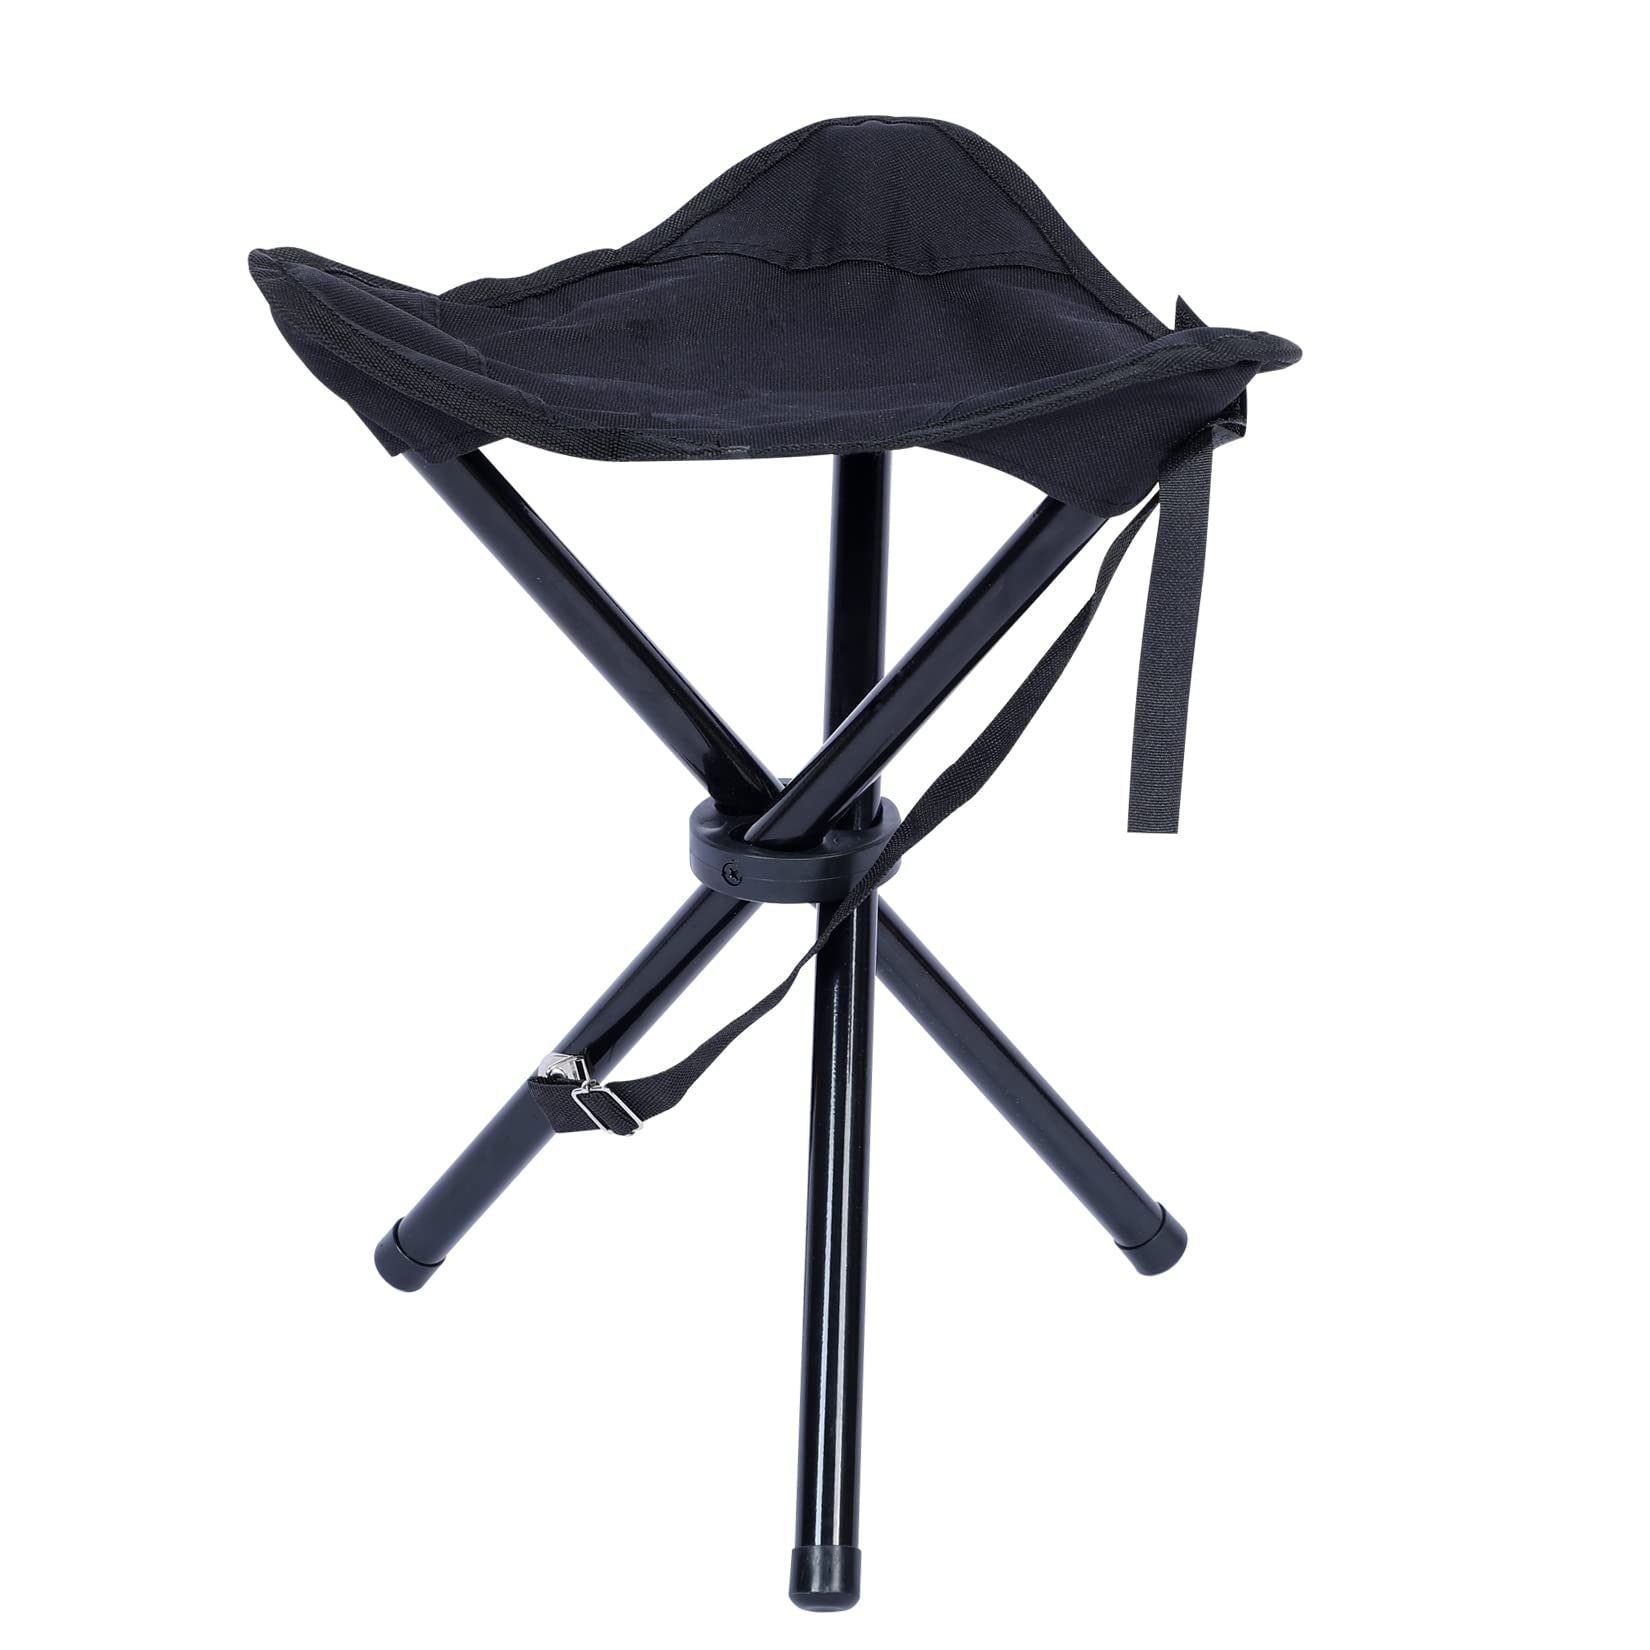 Folding Tripod Camping Stool Tri-Leg Slacker Chair Super Compact